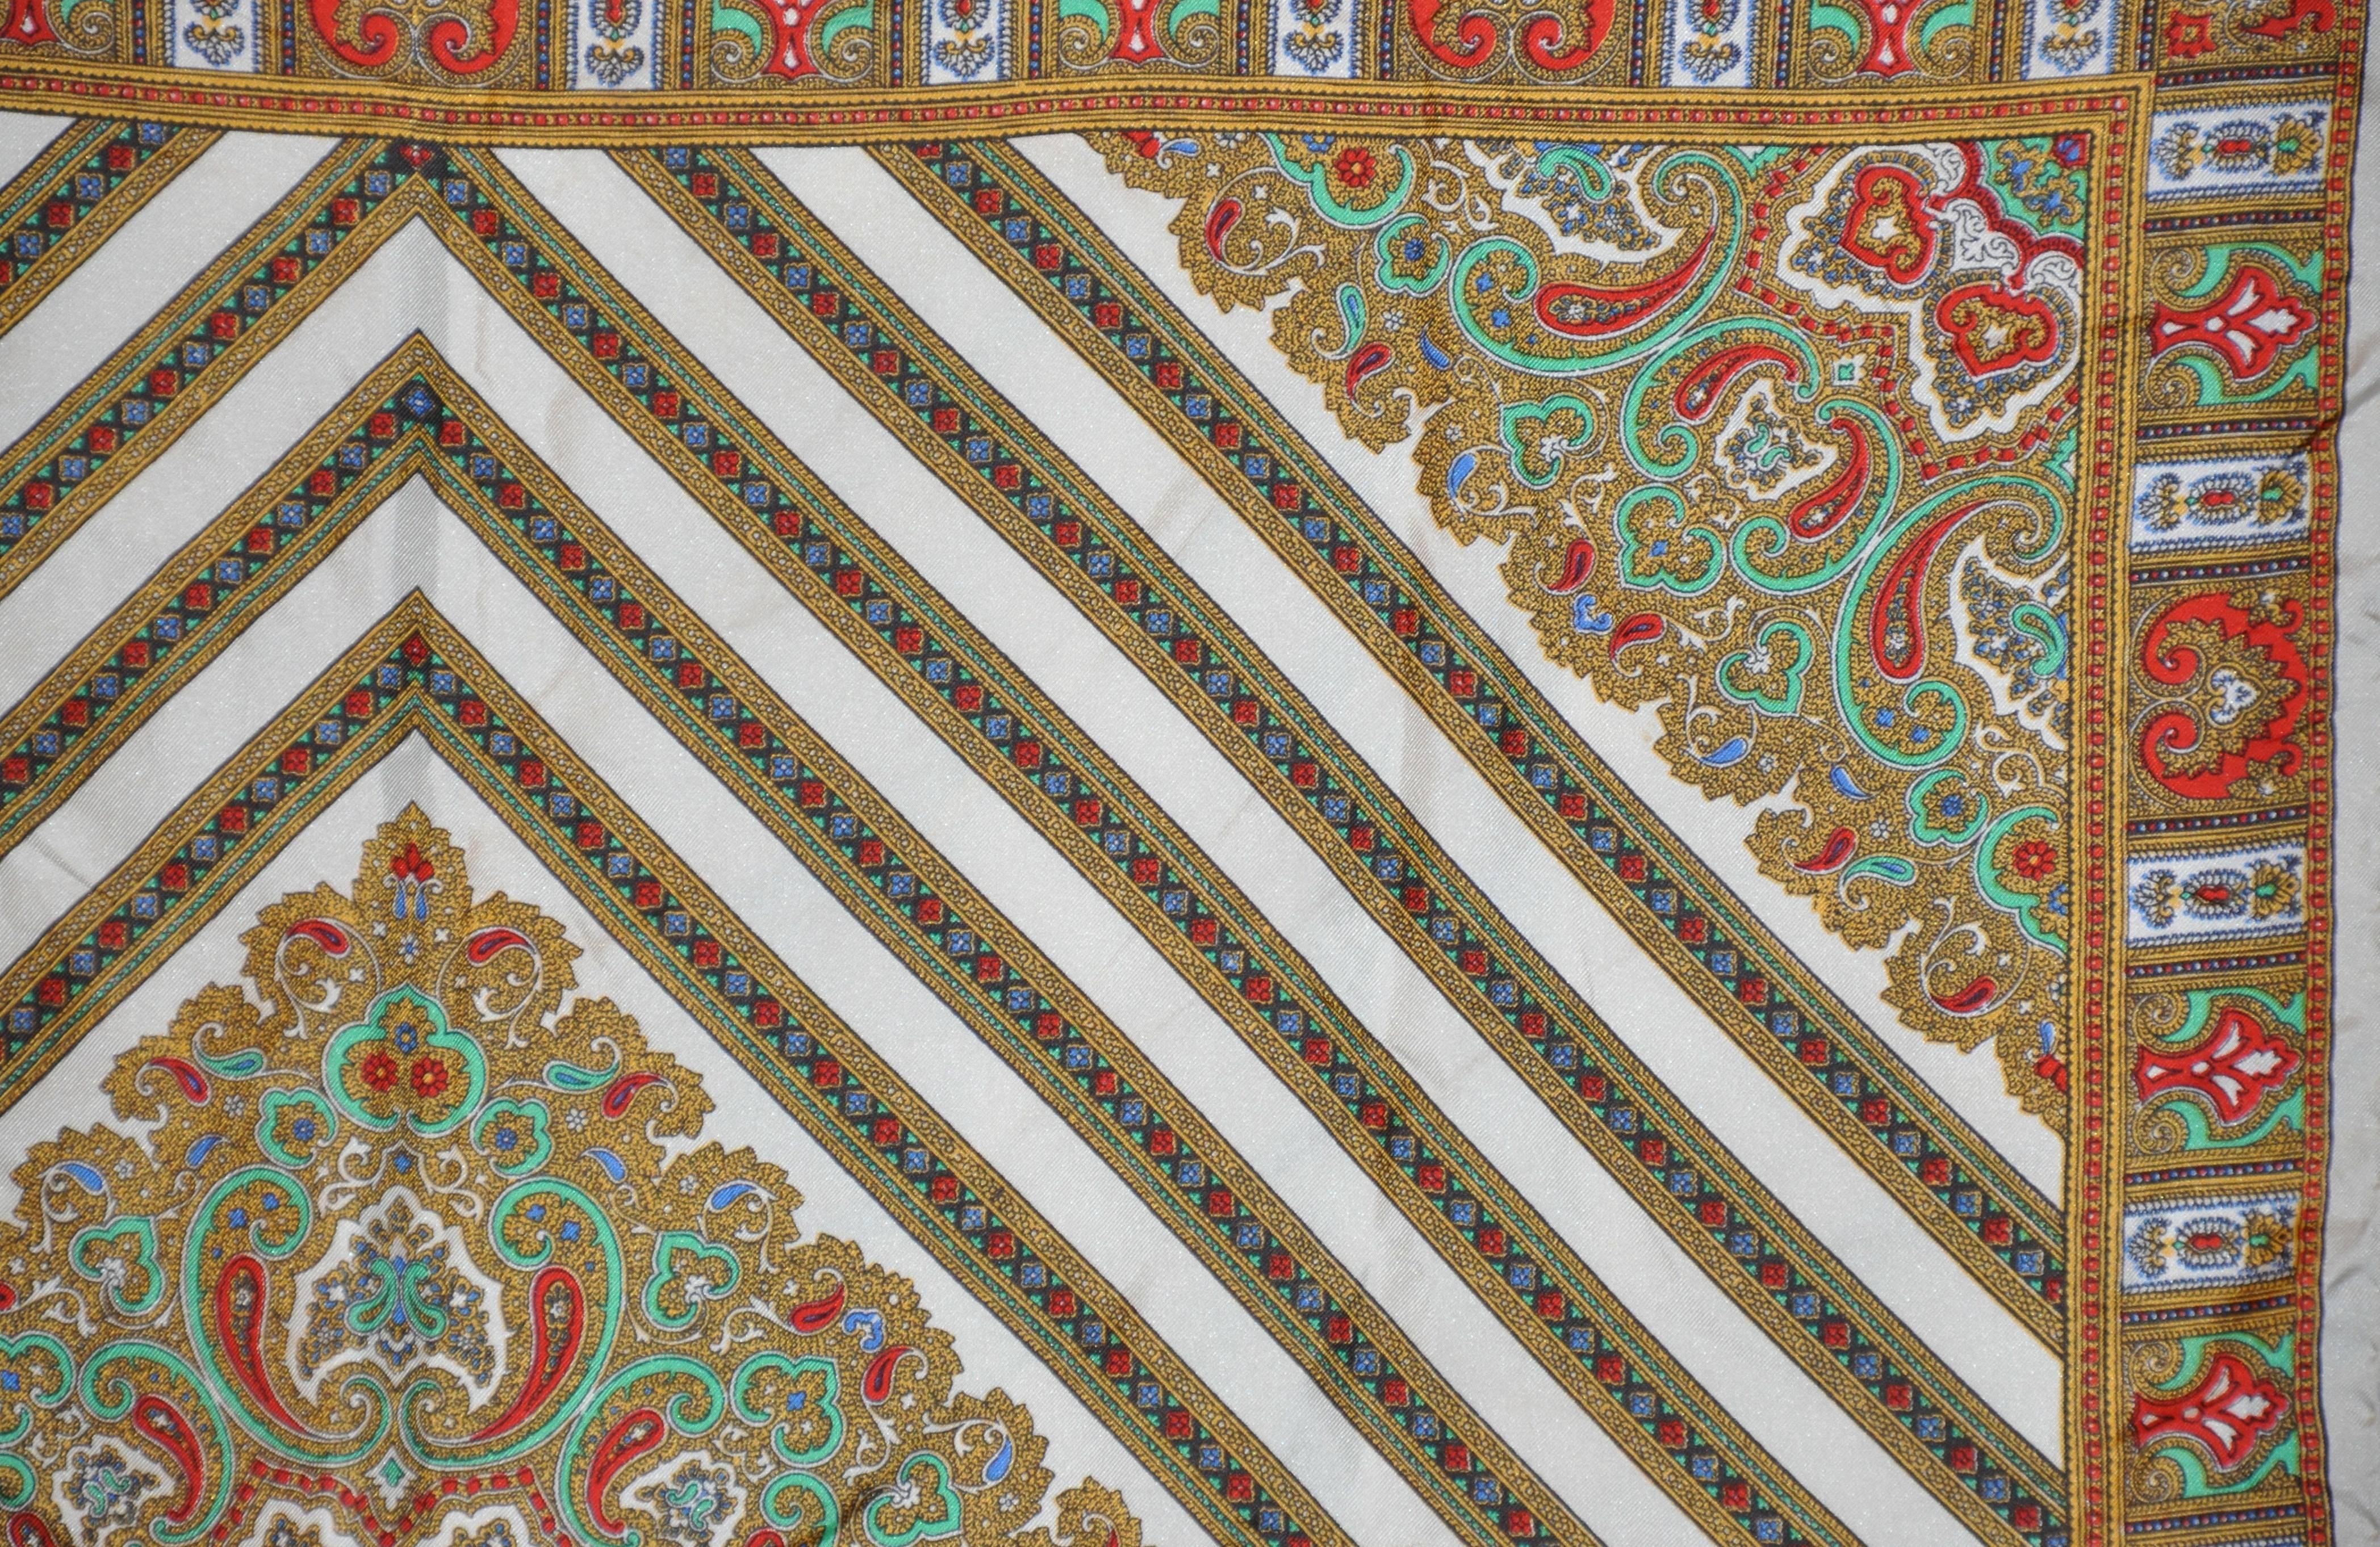          Handcraft's wonderful multi-color multi-palsey print silk scarf measures 26